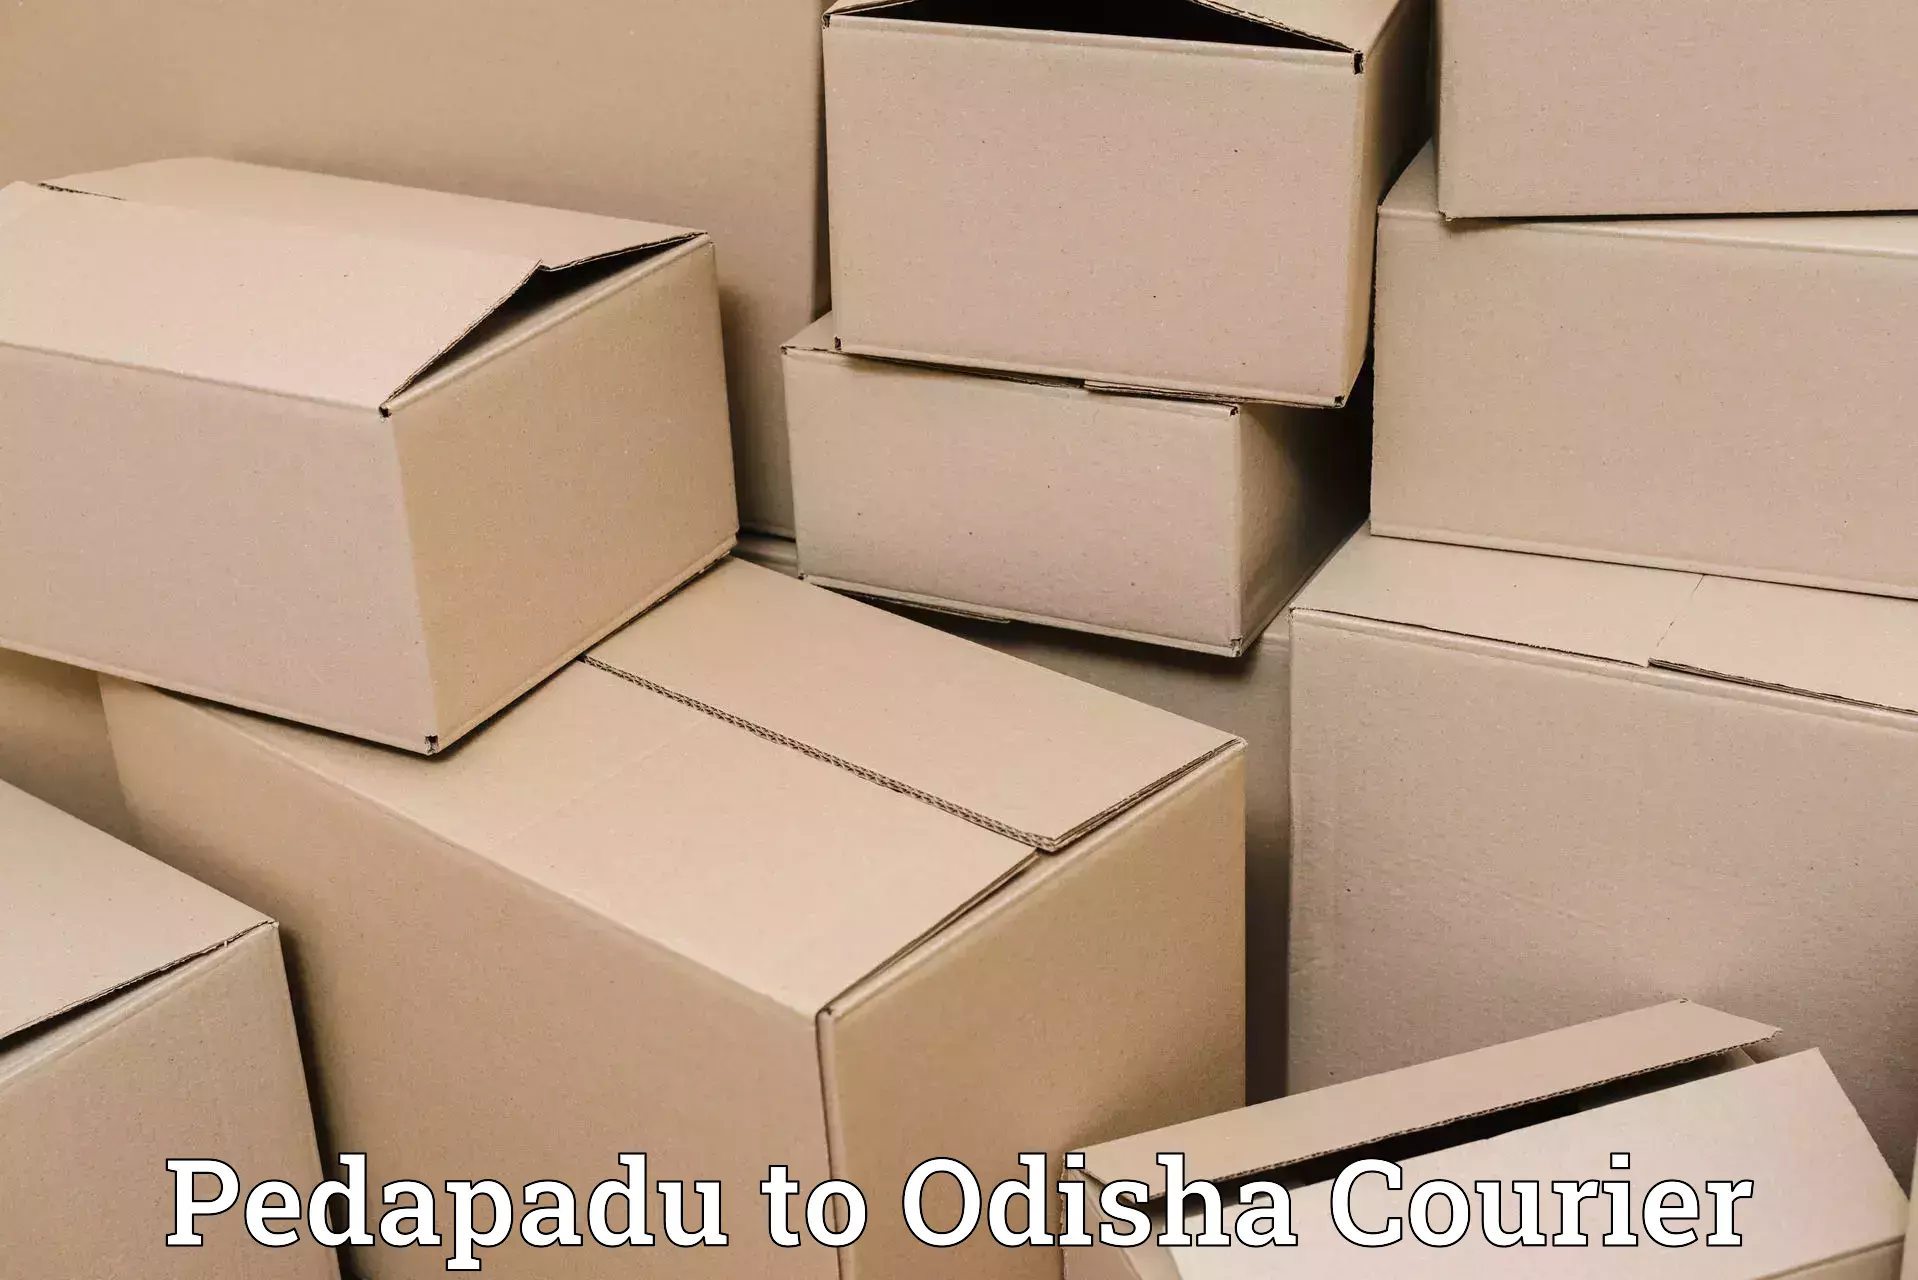 Express delivery capabilities Pedapadu to Jaleswar